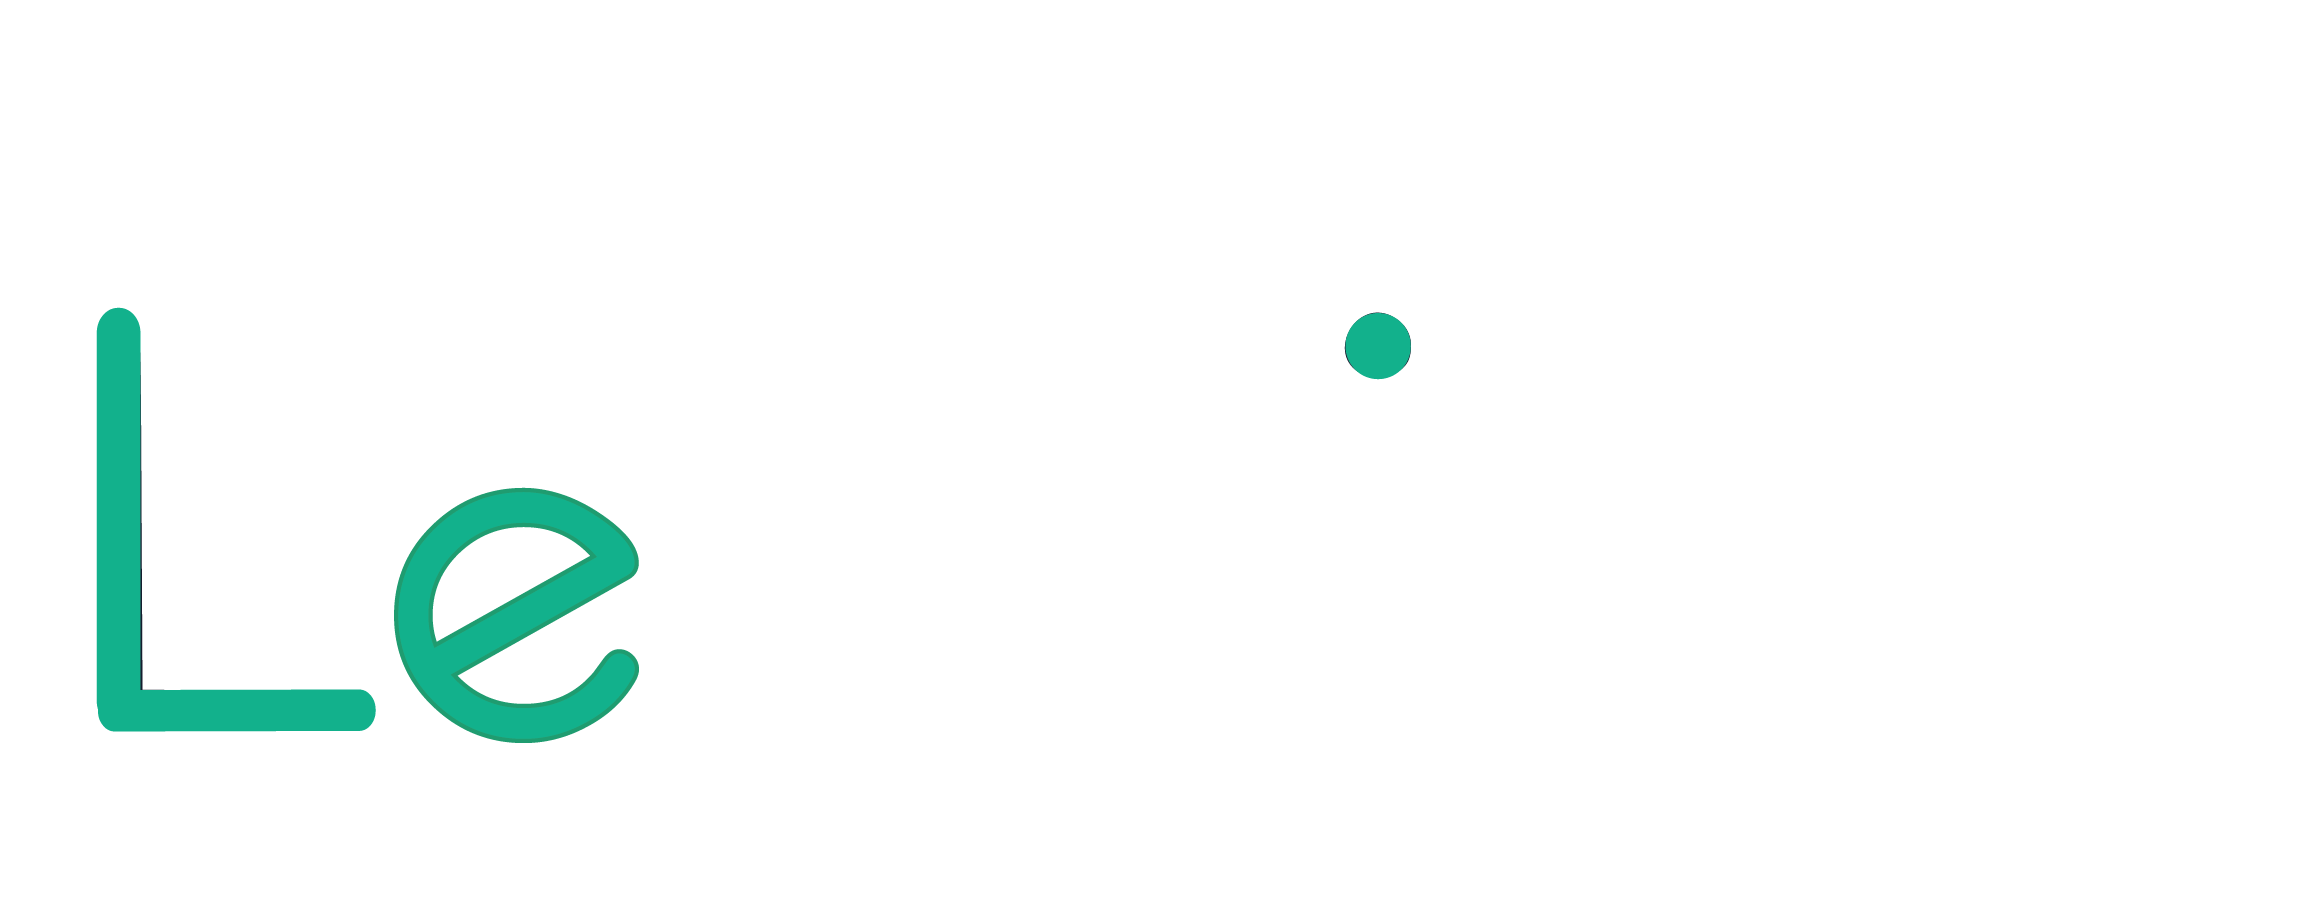 Nova Logomarca LeClinic toda Colorida E fundo Transparente